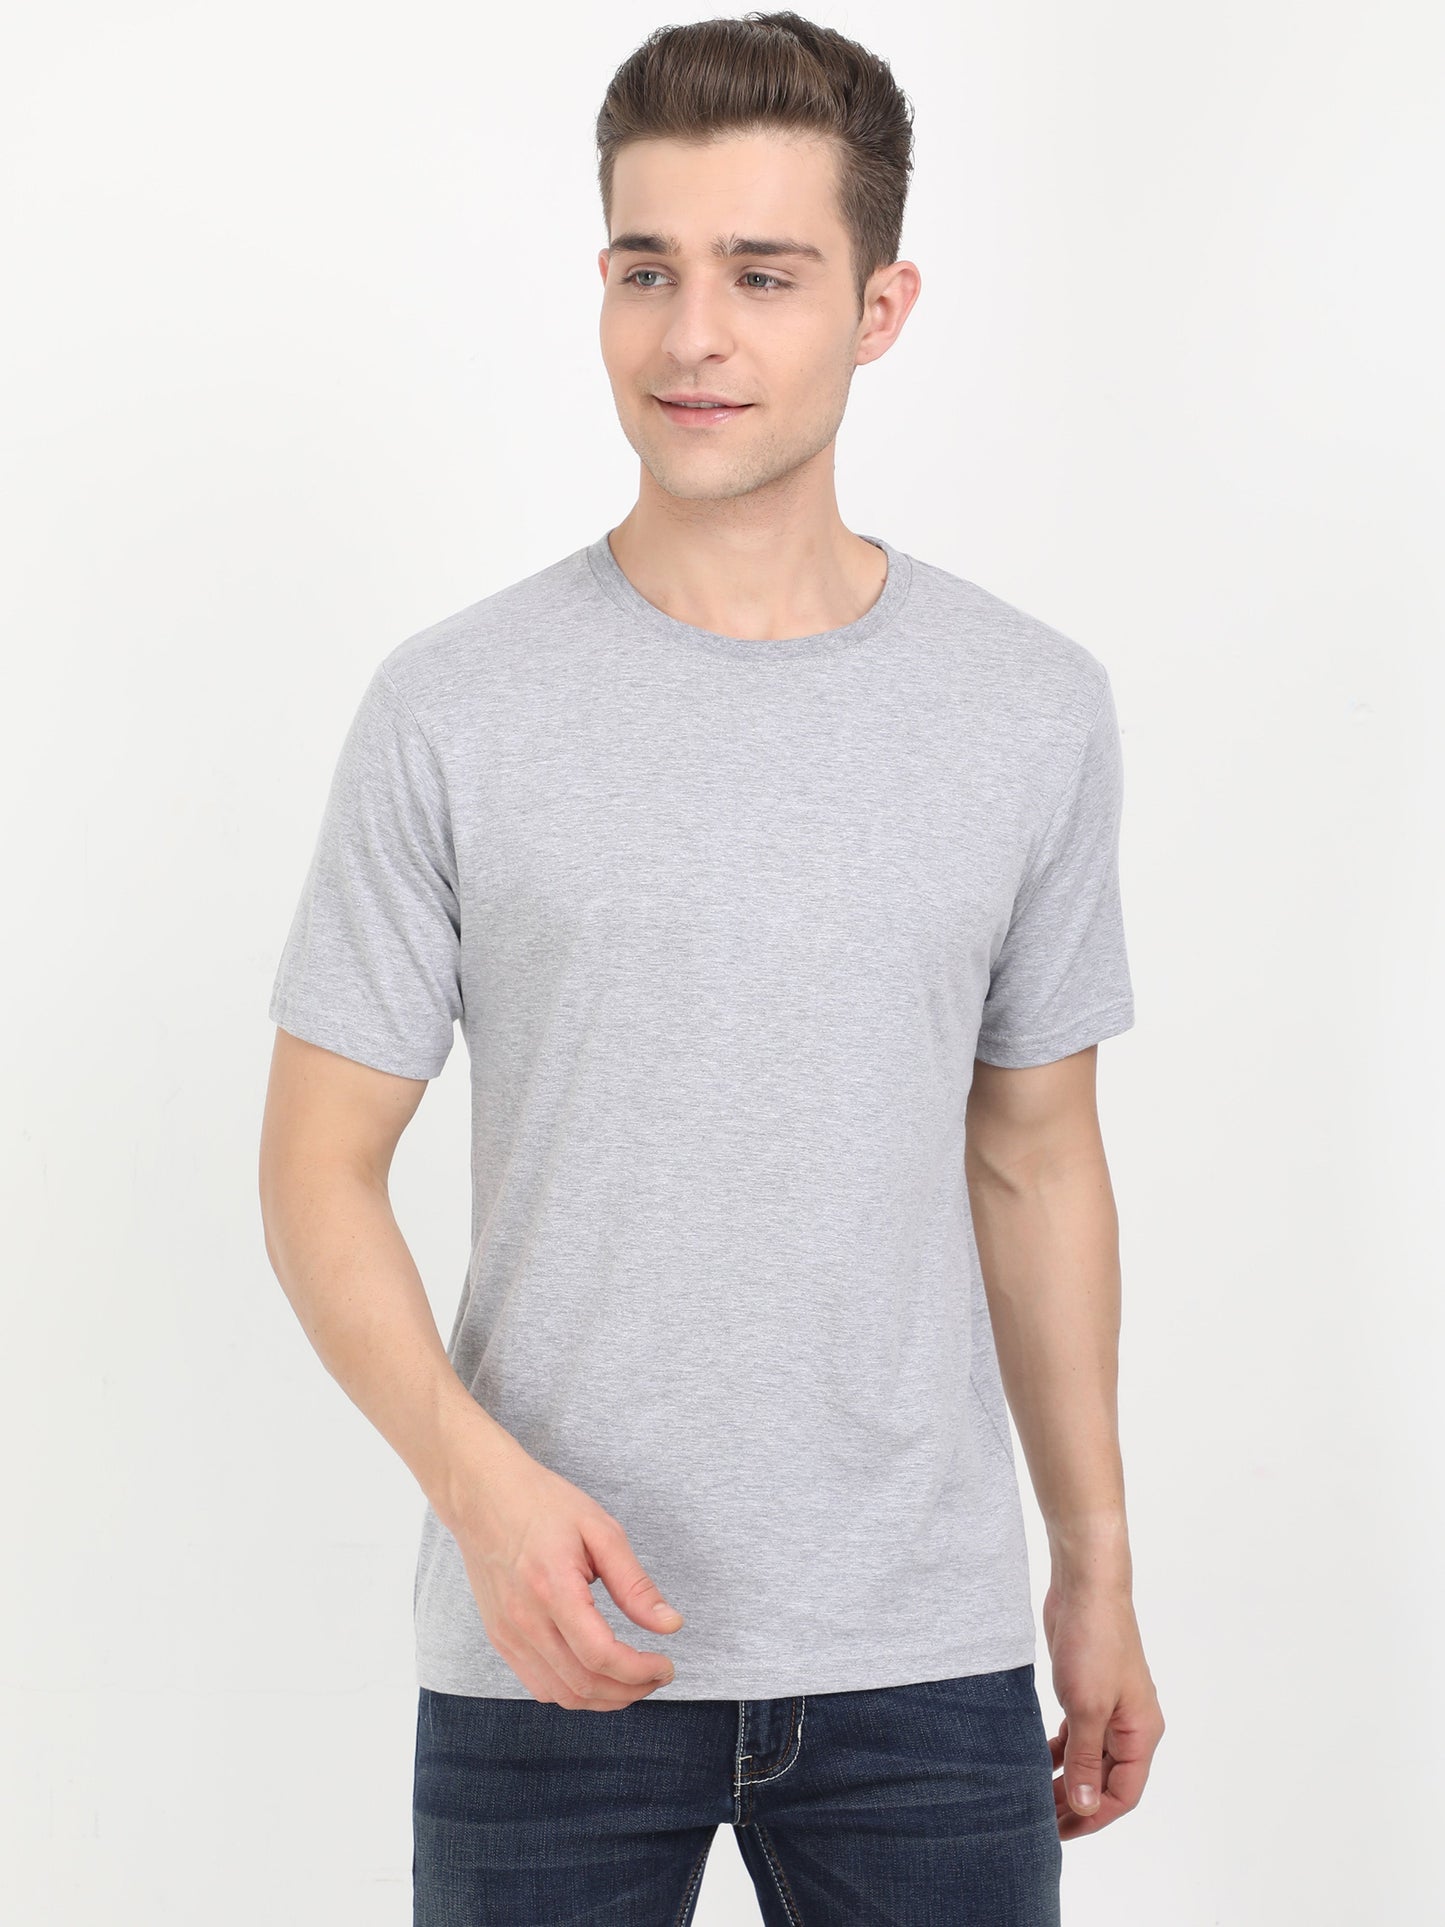 Men's Cotton Plain Round Neck Half Sleeve T-Shirt